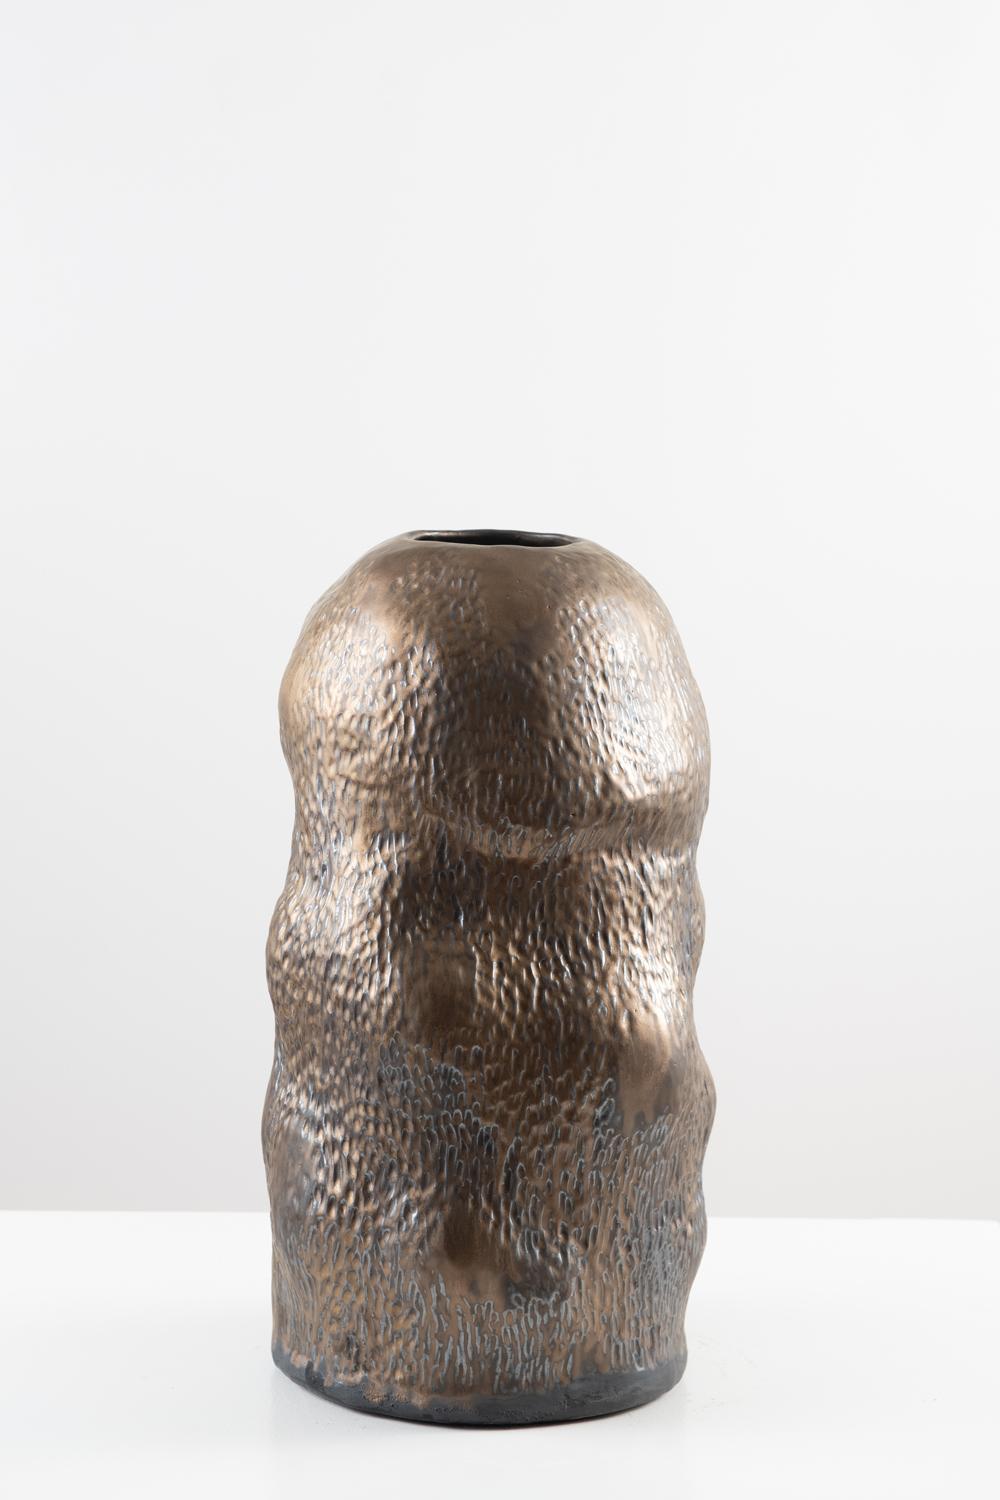 Trish DeMasi
Camille Vessel, 2021
Metallic glazed ceramic
9 x 9 x 18 in.